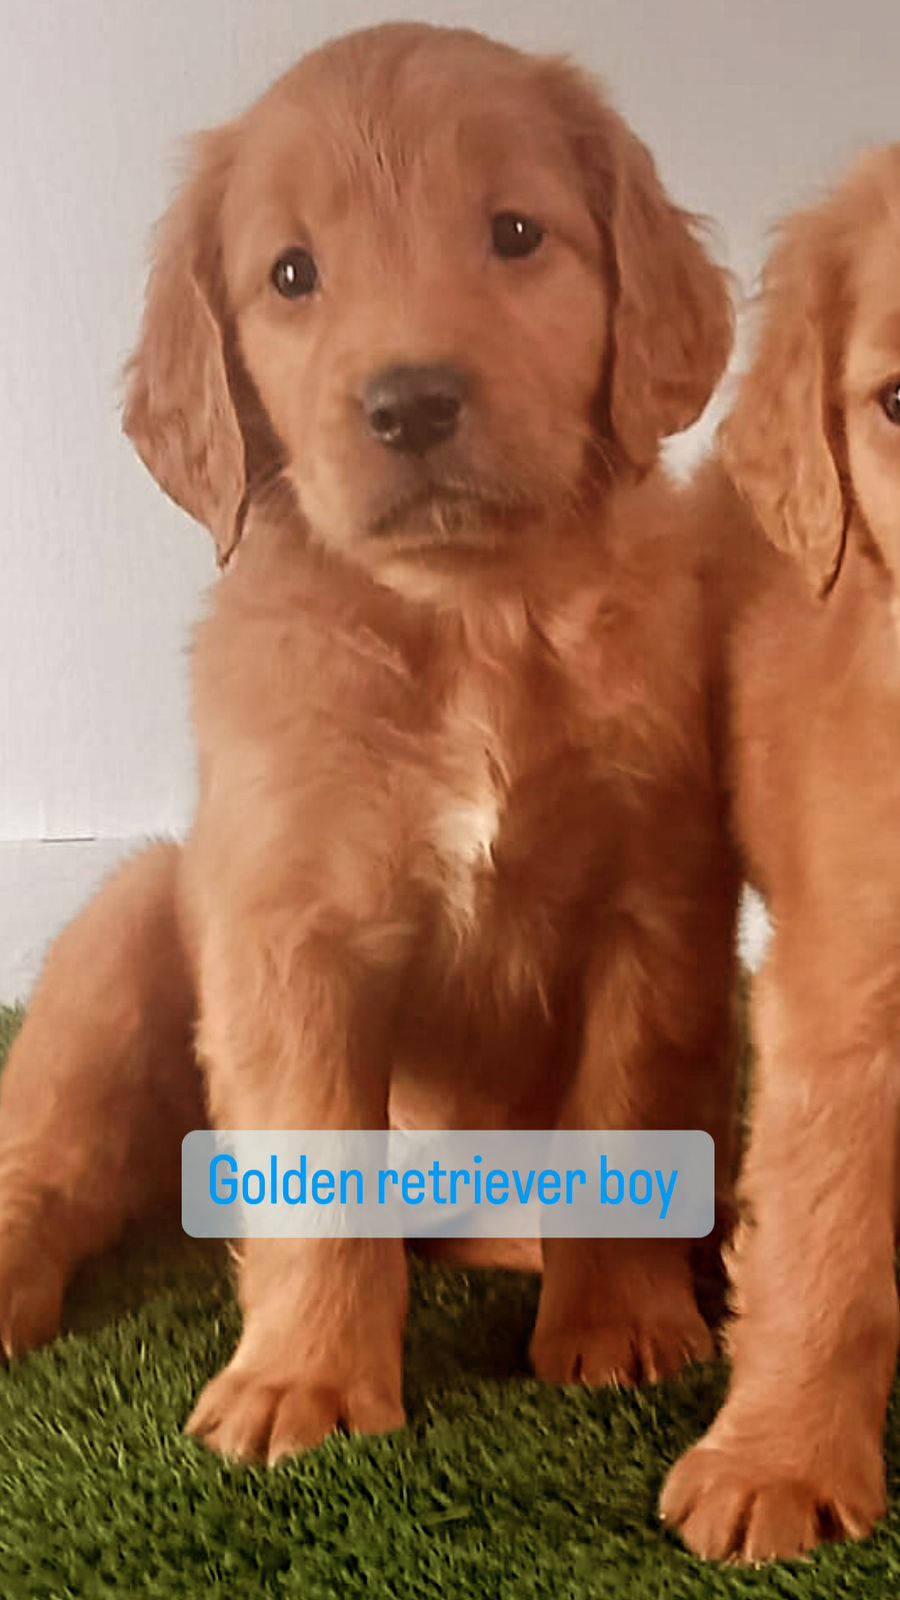 Golden retriever boy